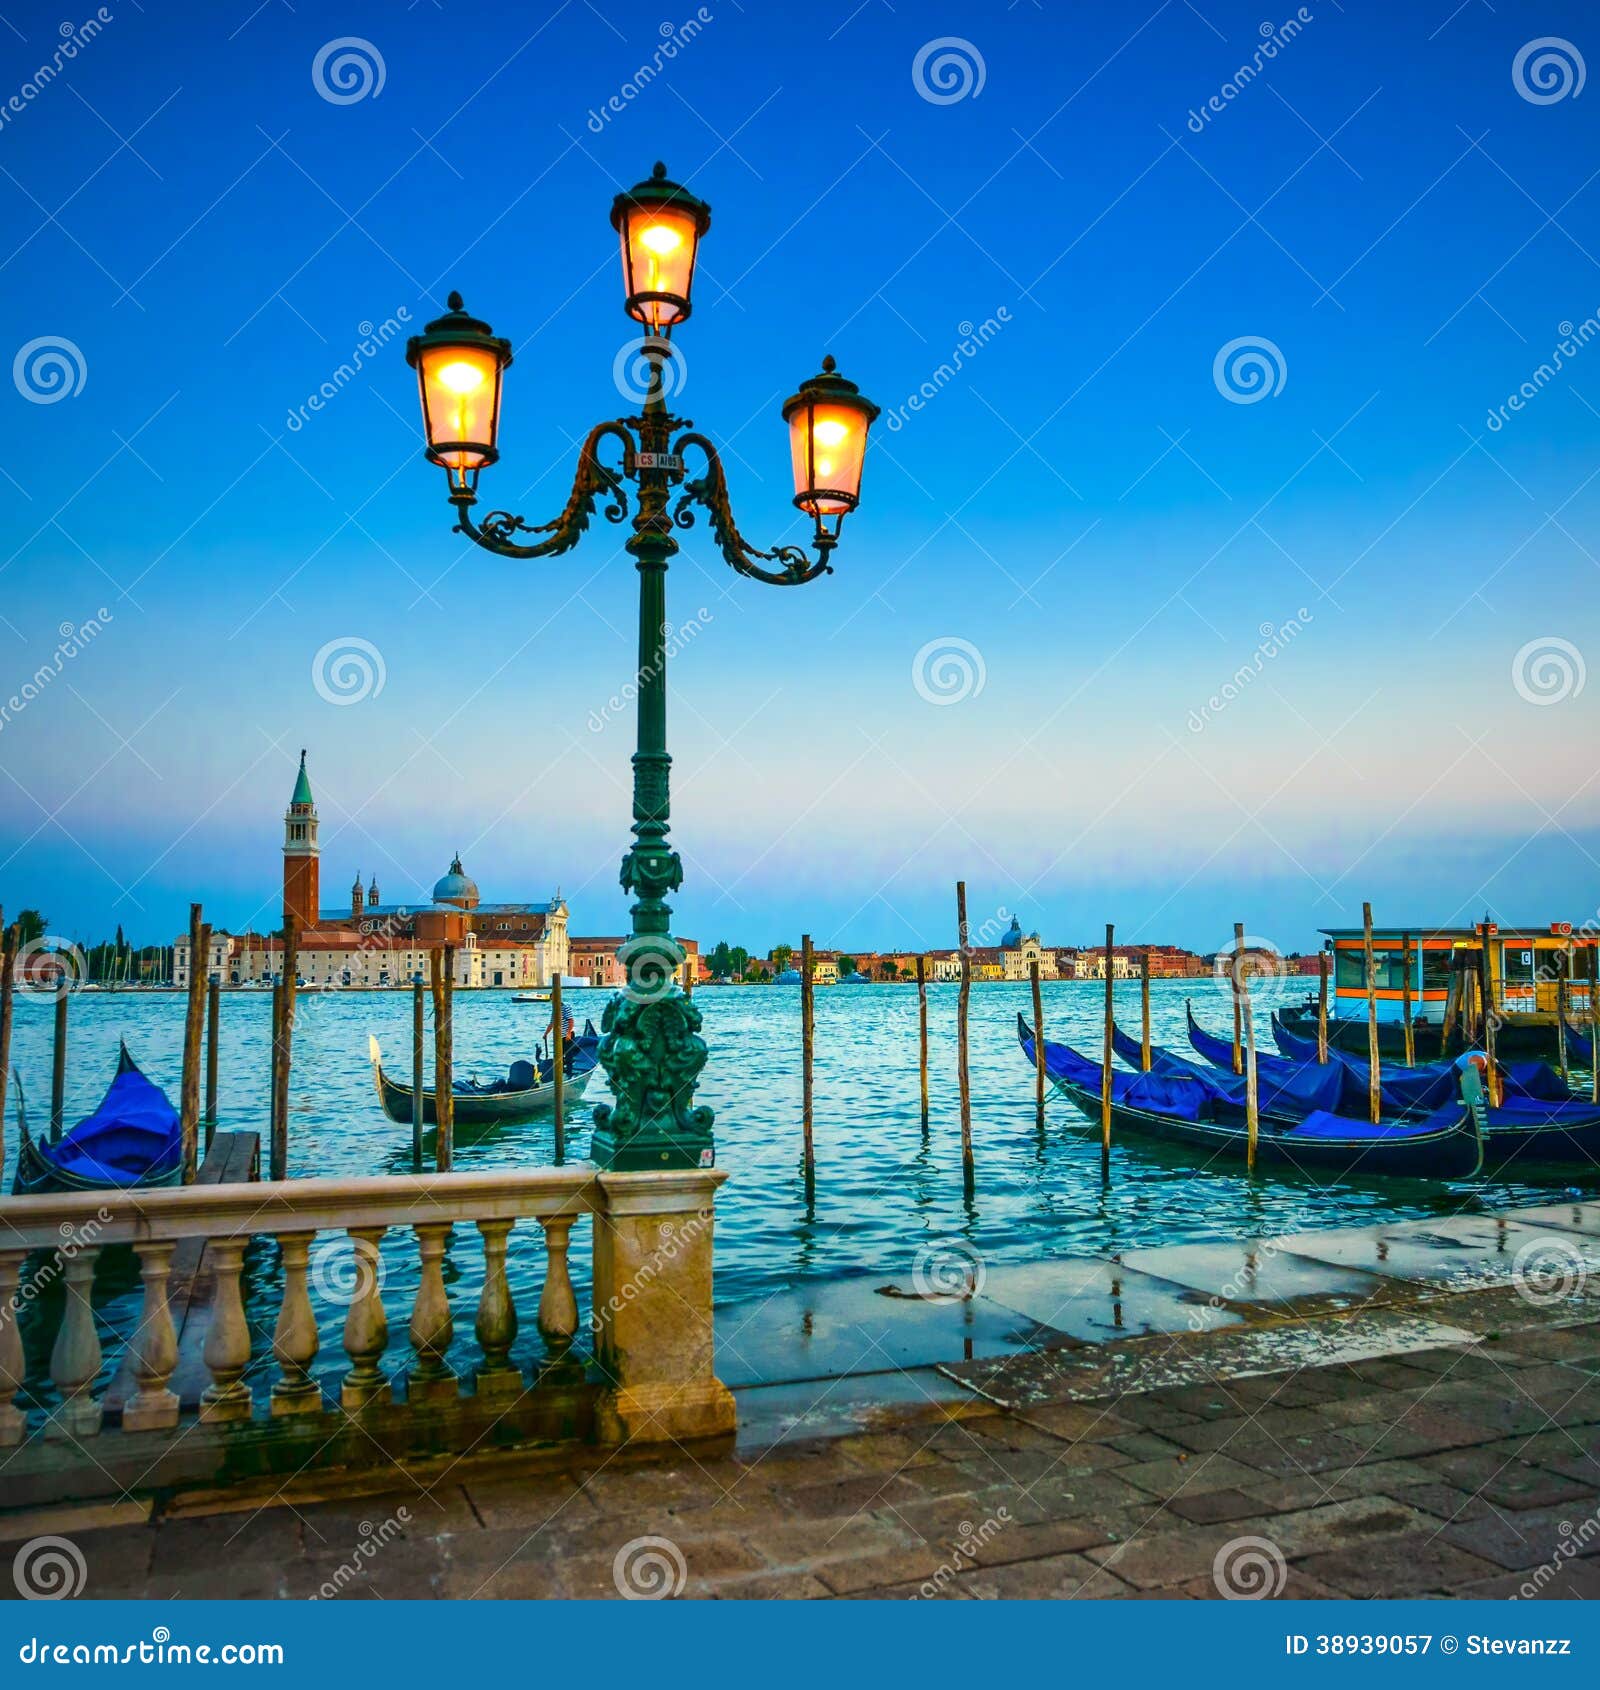 Venice Street Lamp And Gondolas On Sunset Italy Stock Image Image